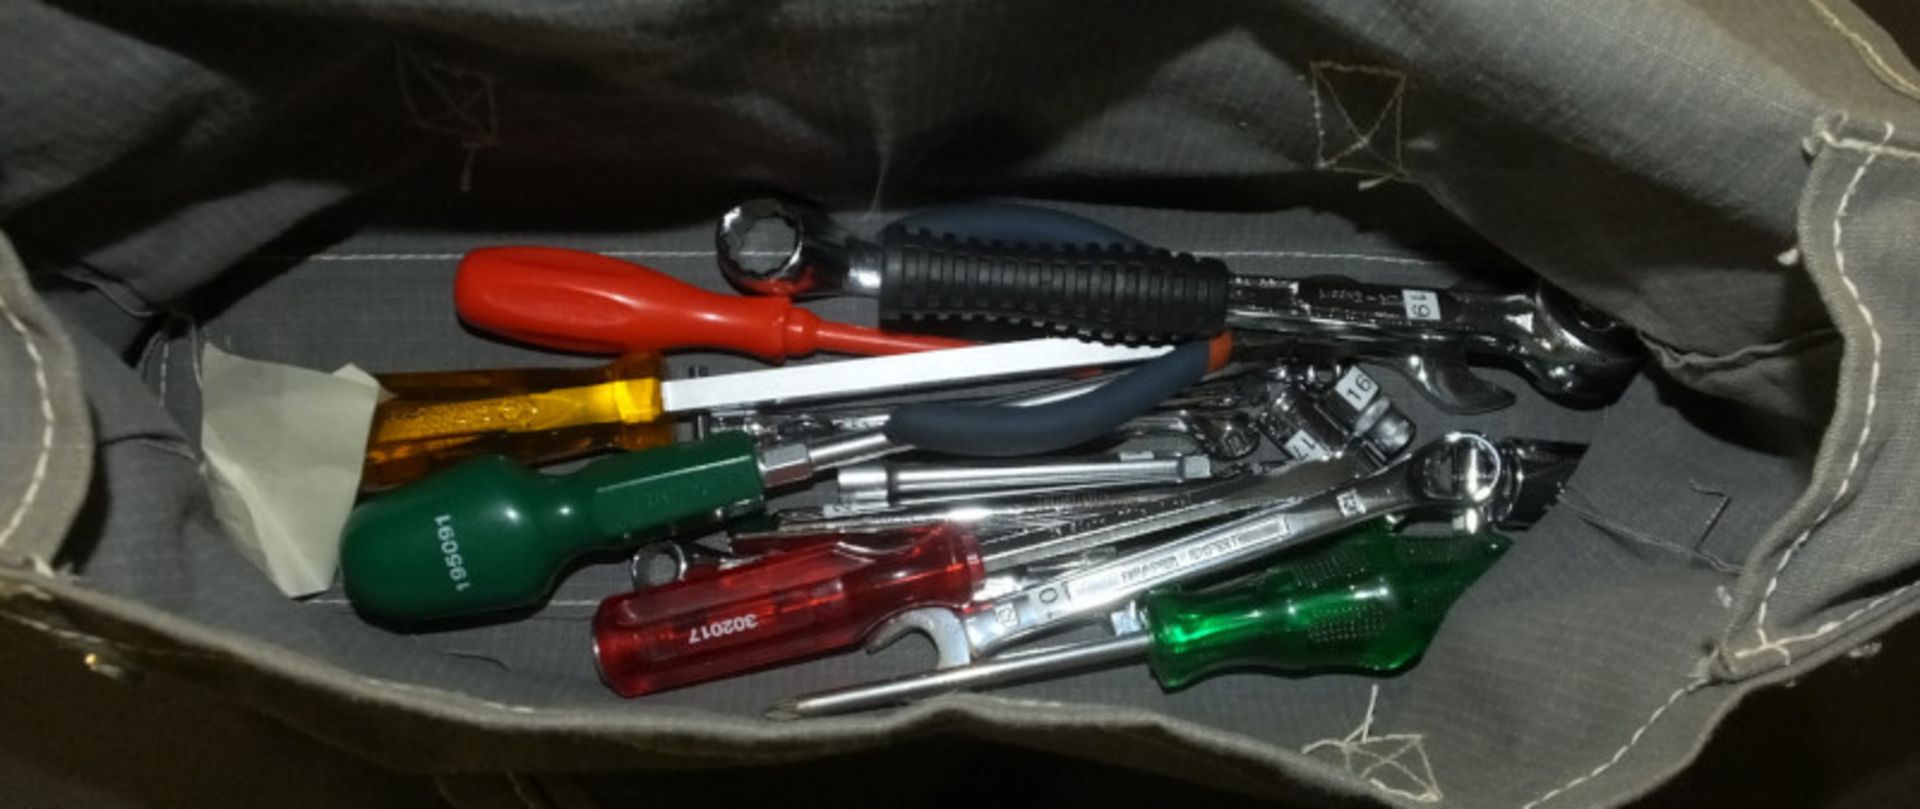 Tool Kit In Bag - Various Screwdrivers, Spanners, Cutters, Socket - Image 2 of 2